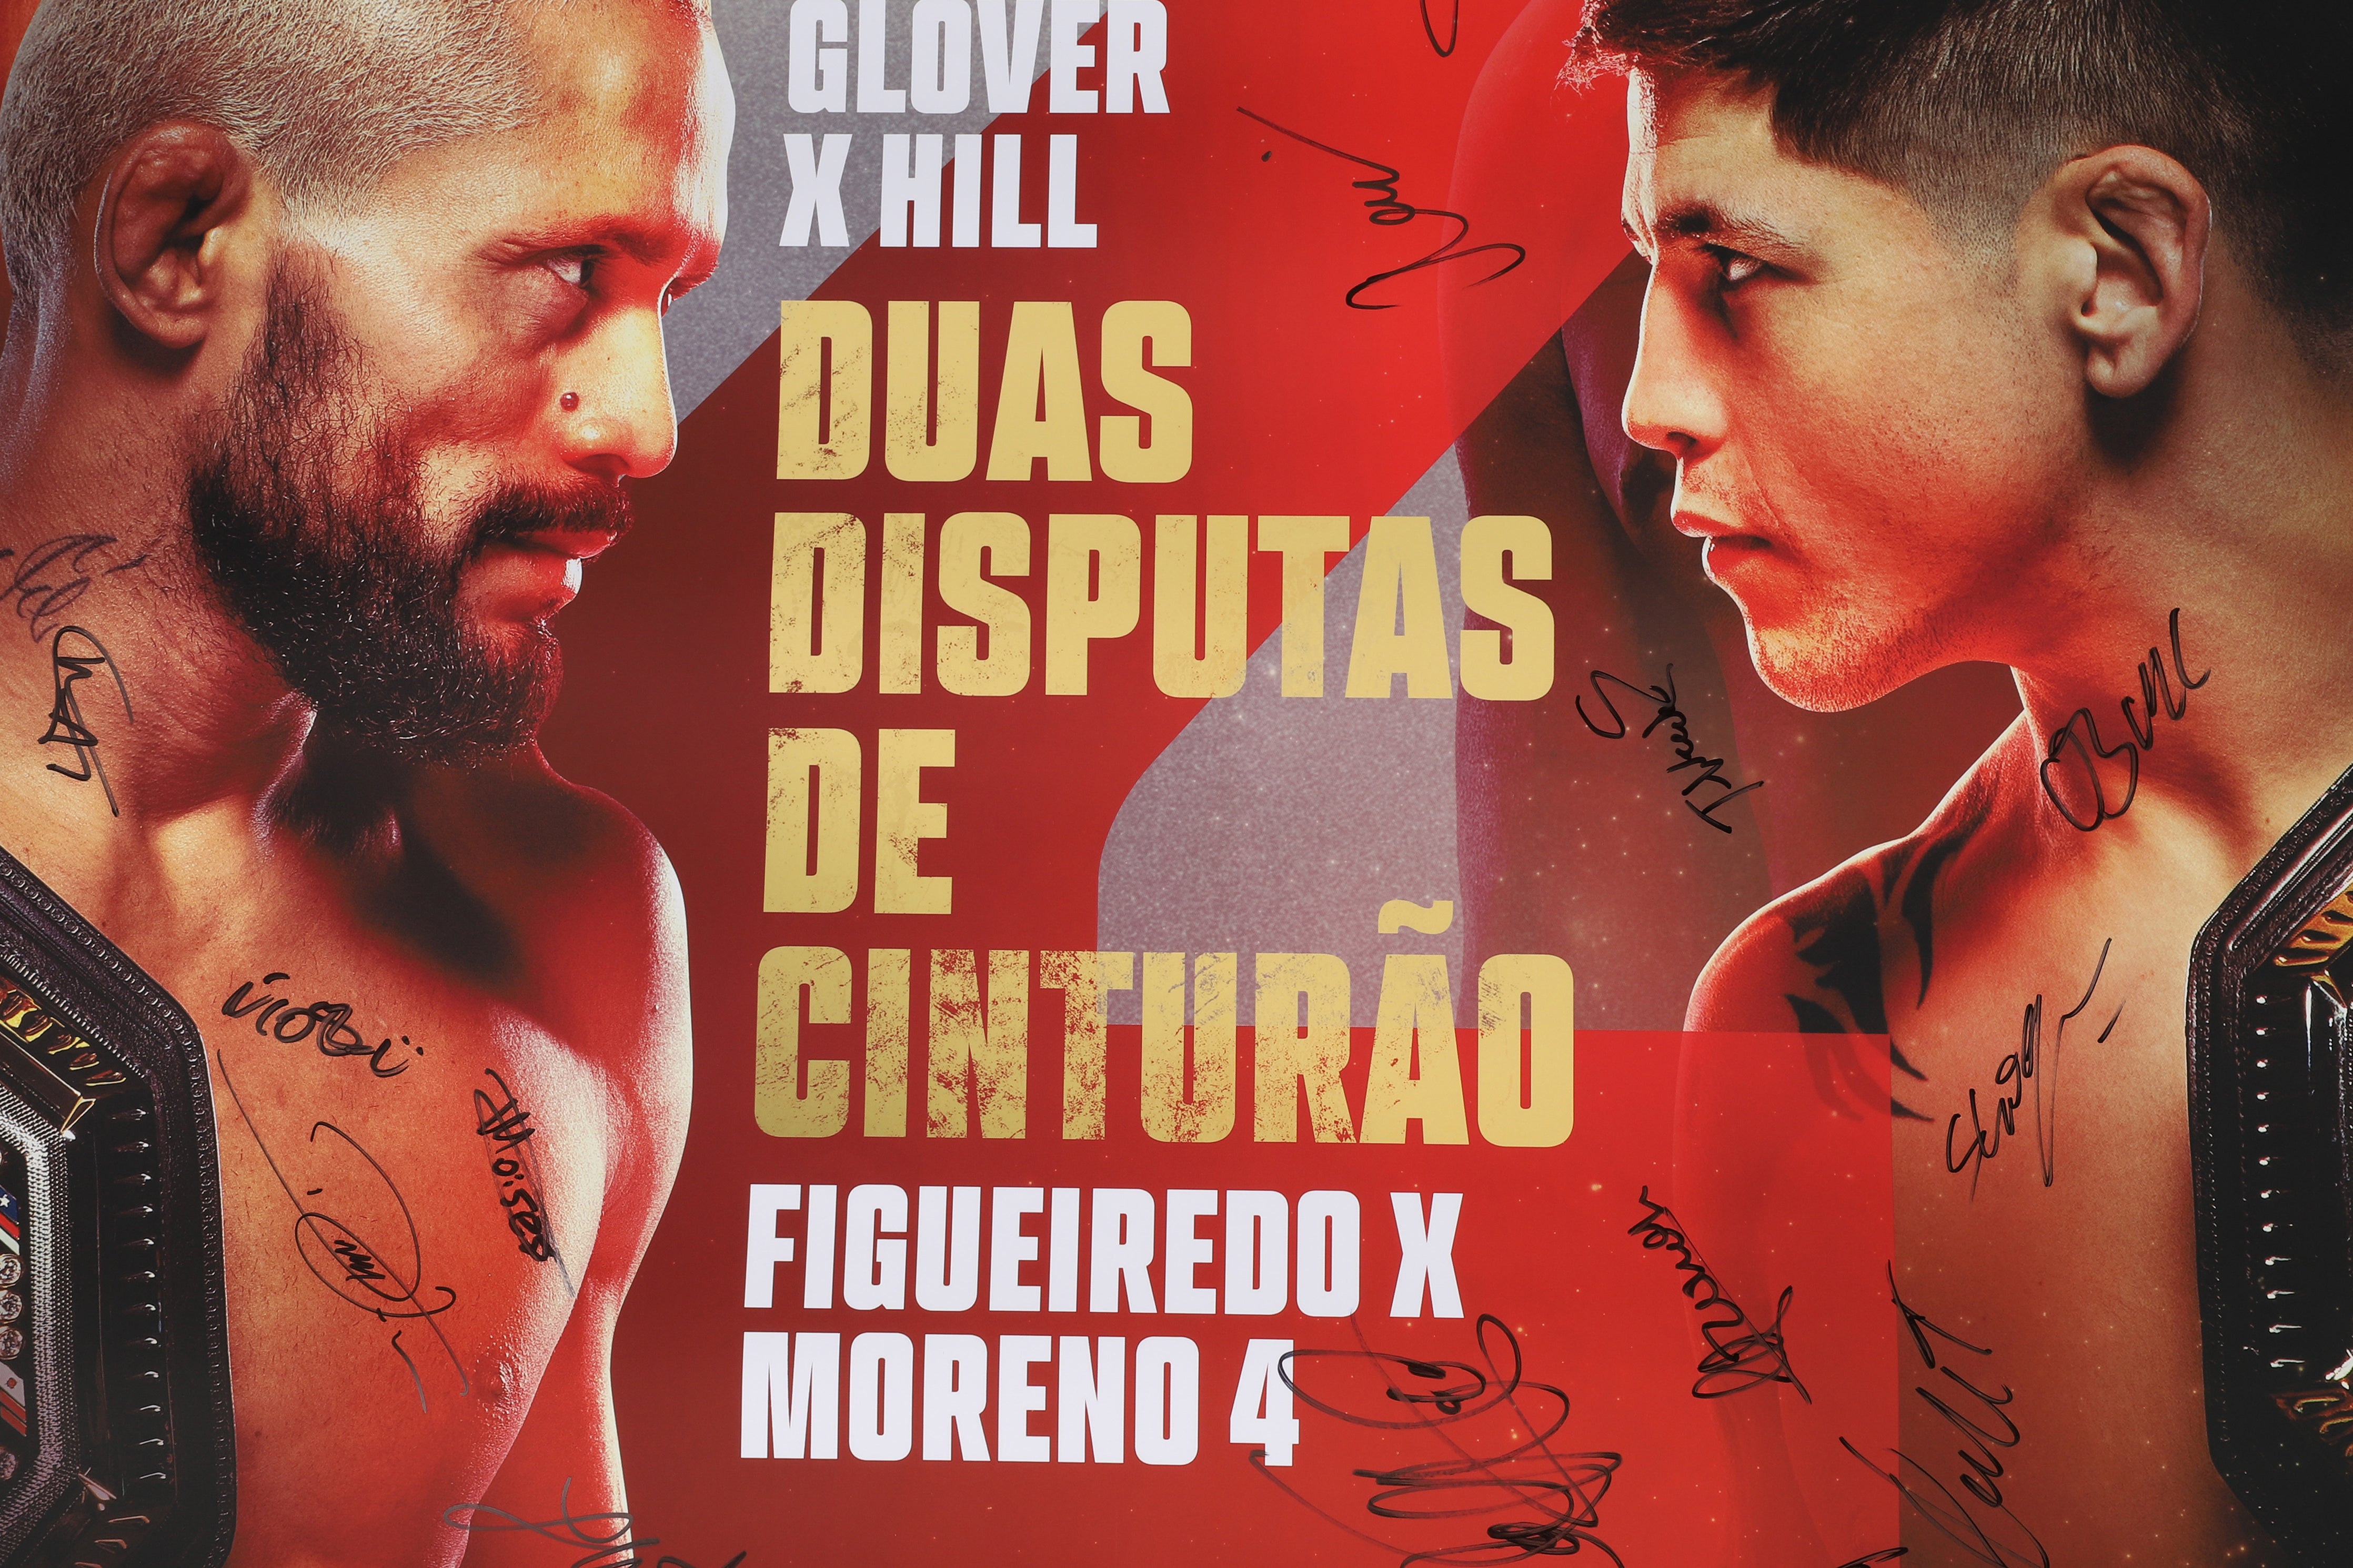 UFC 283: Teixeira vs Hill Autographed Event Poster